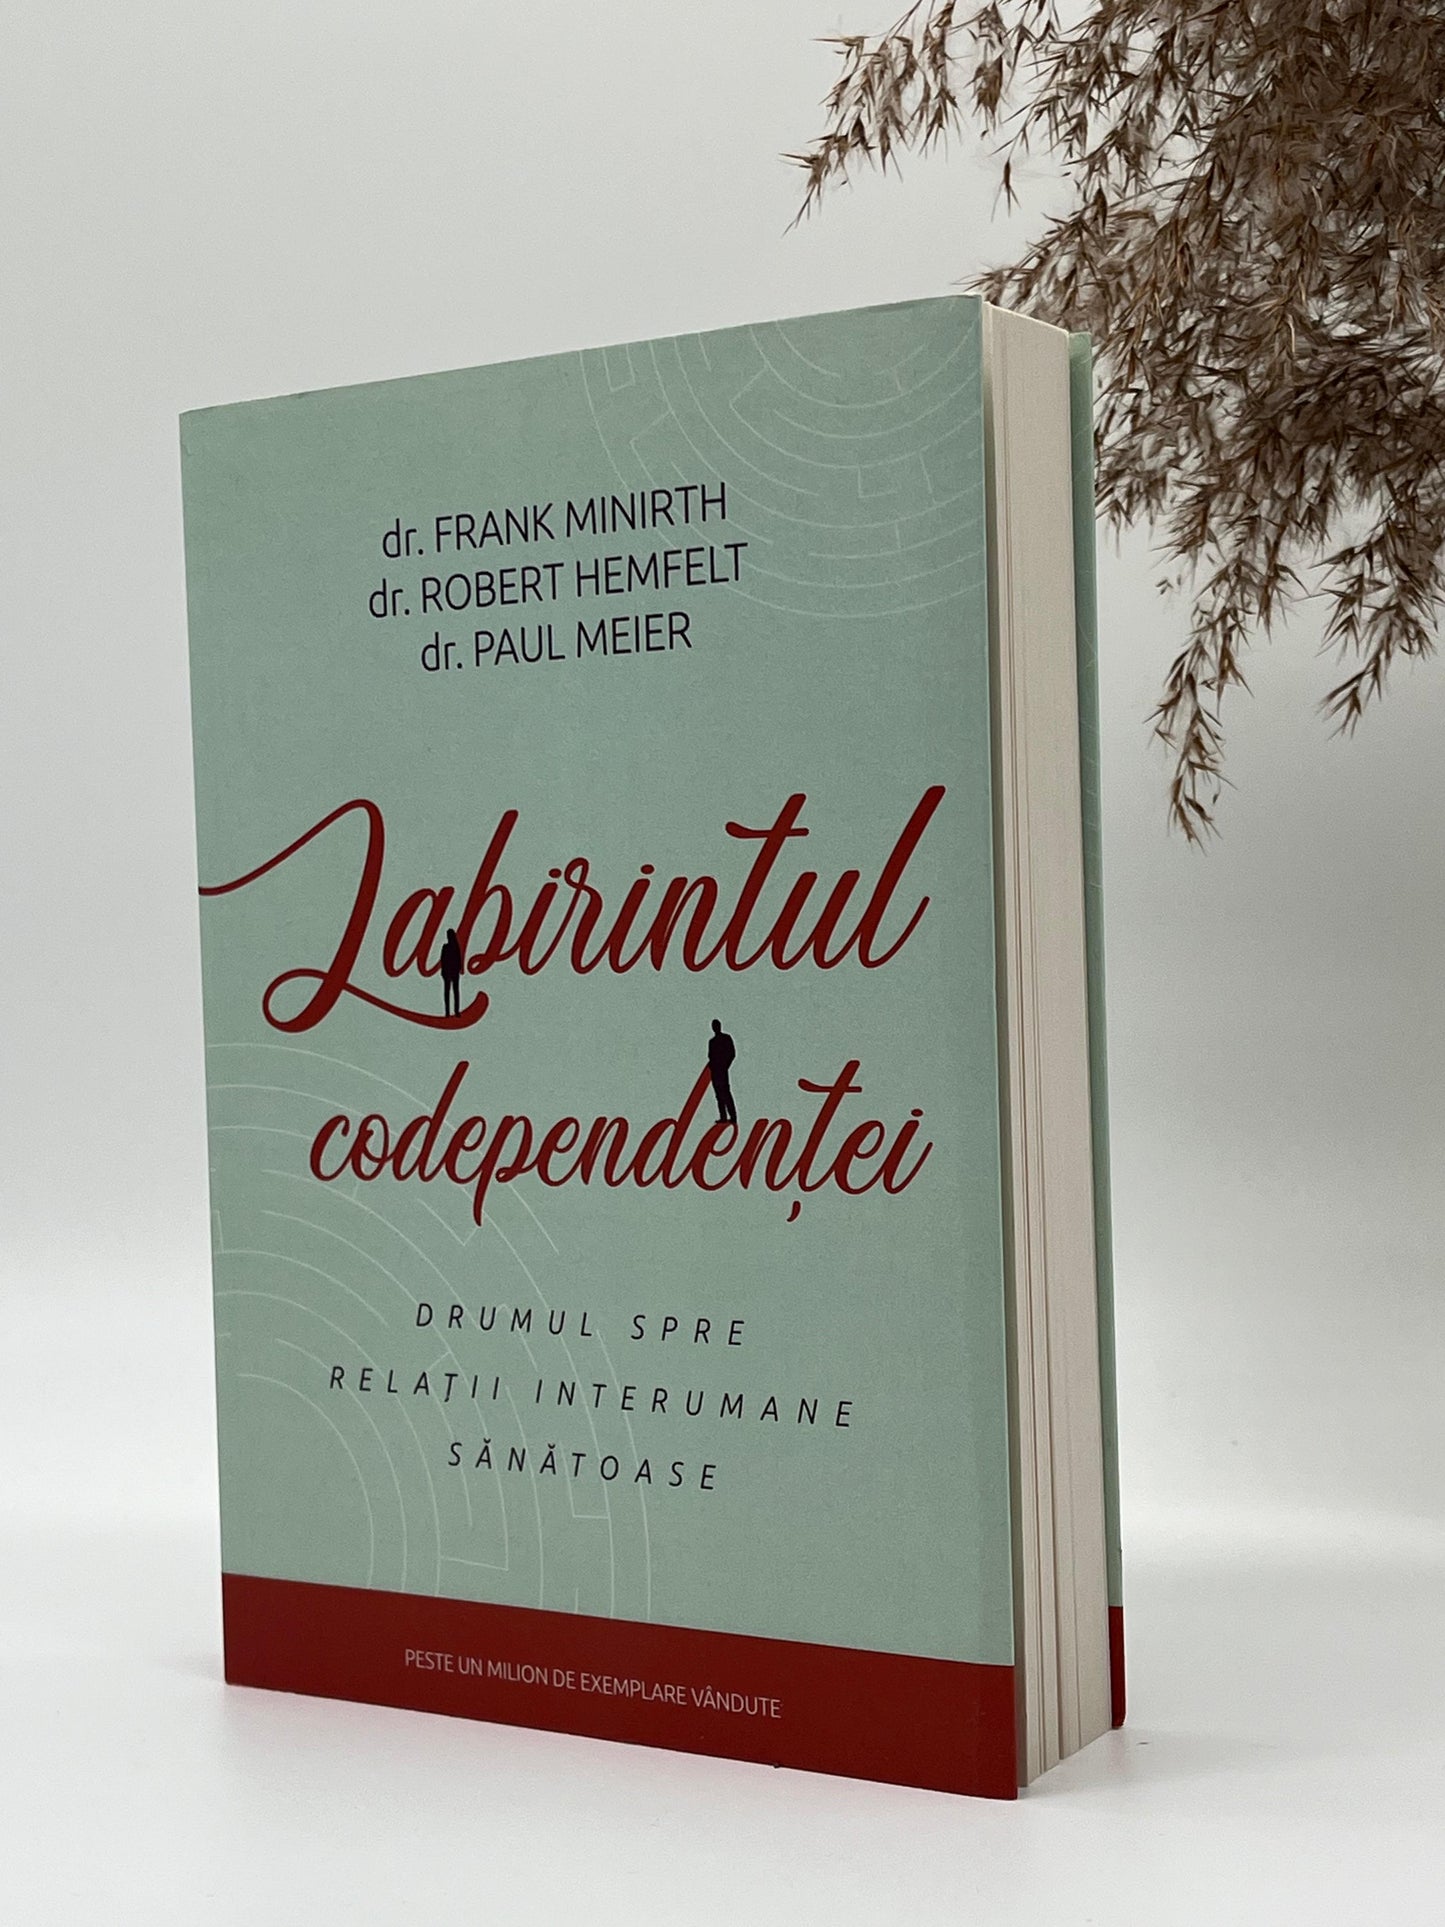 Labirintul codependenței - drumul spre relații interumane sănătoase -
Dr. Robert Hemfelt; Dr. Frank Minirth; Dr. Paul Meier